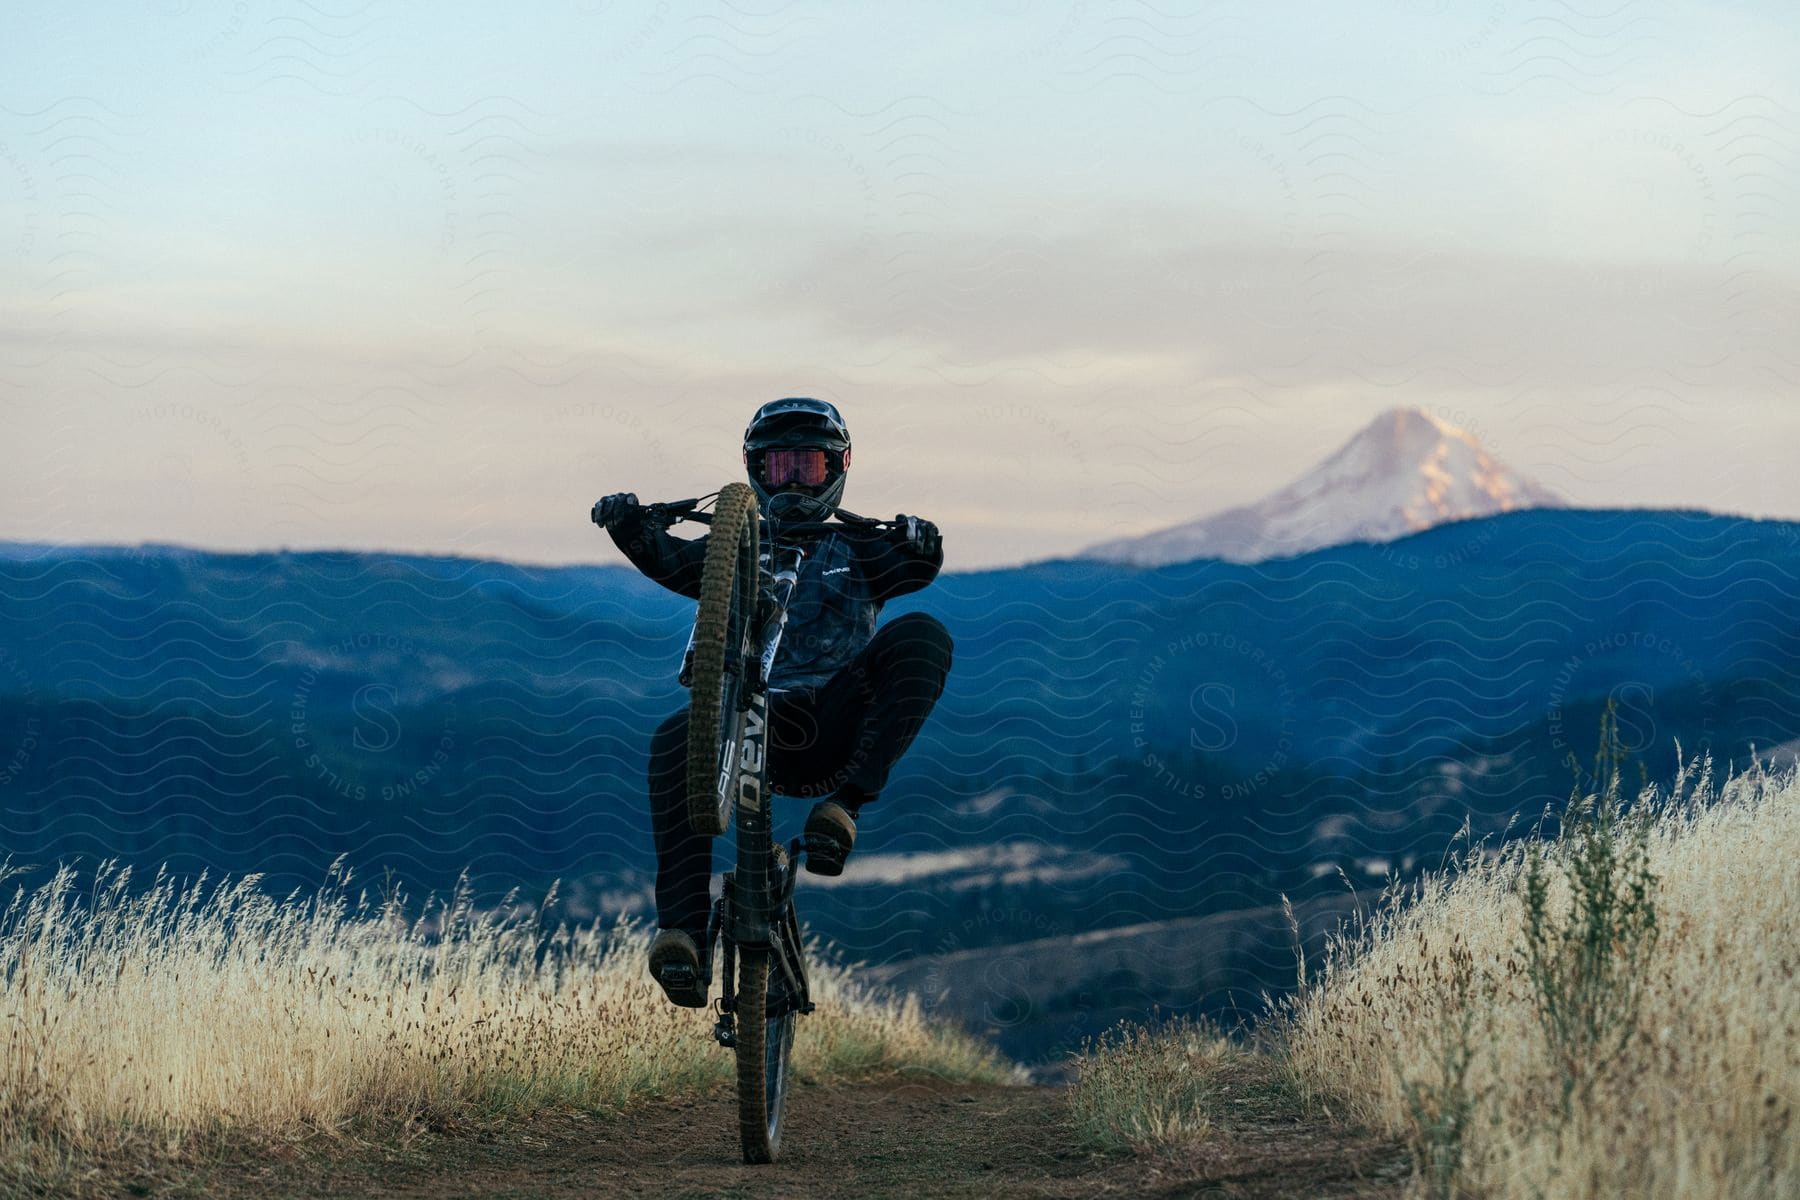 A person is doing a wheelie maneuver on a mountain bike.